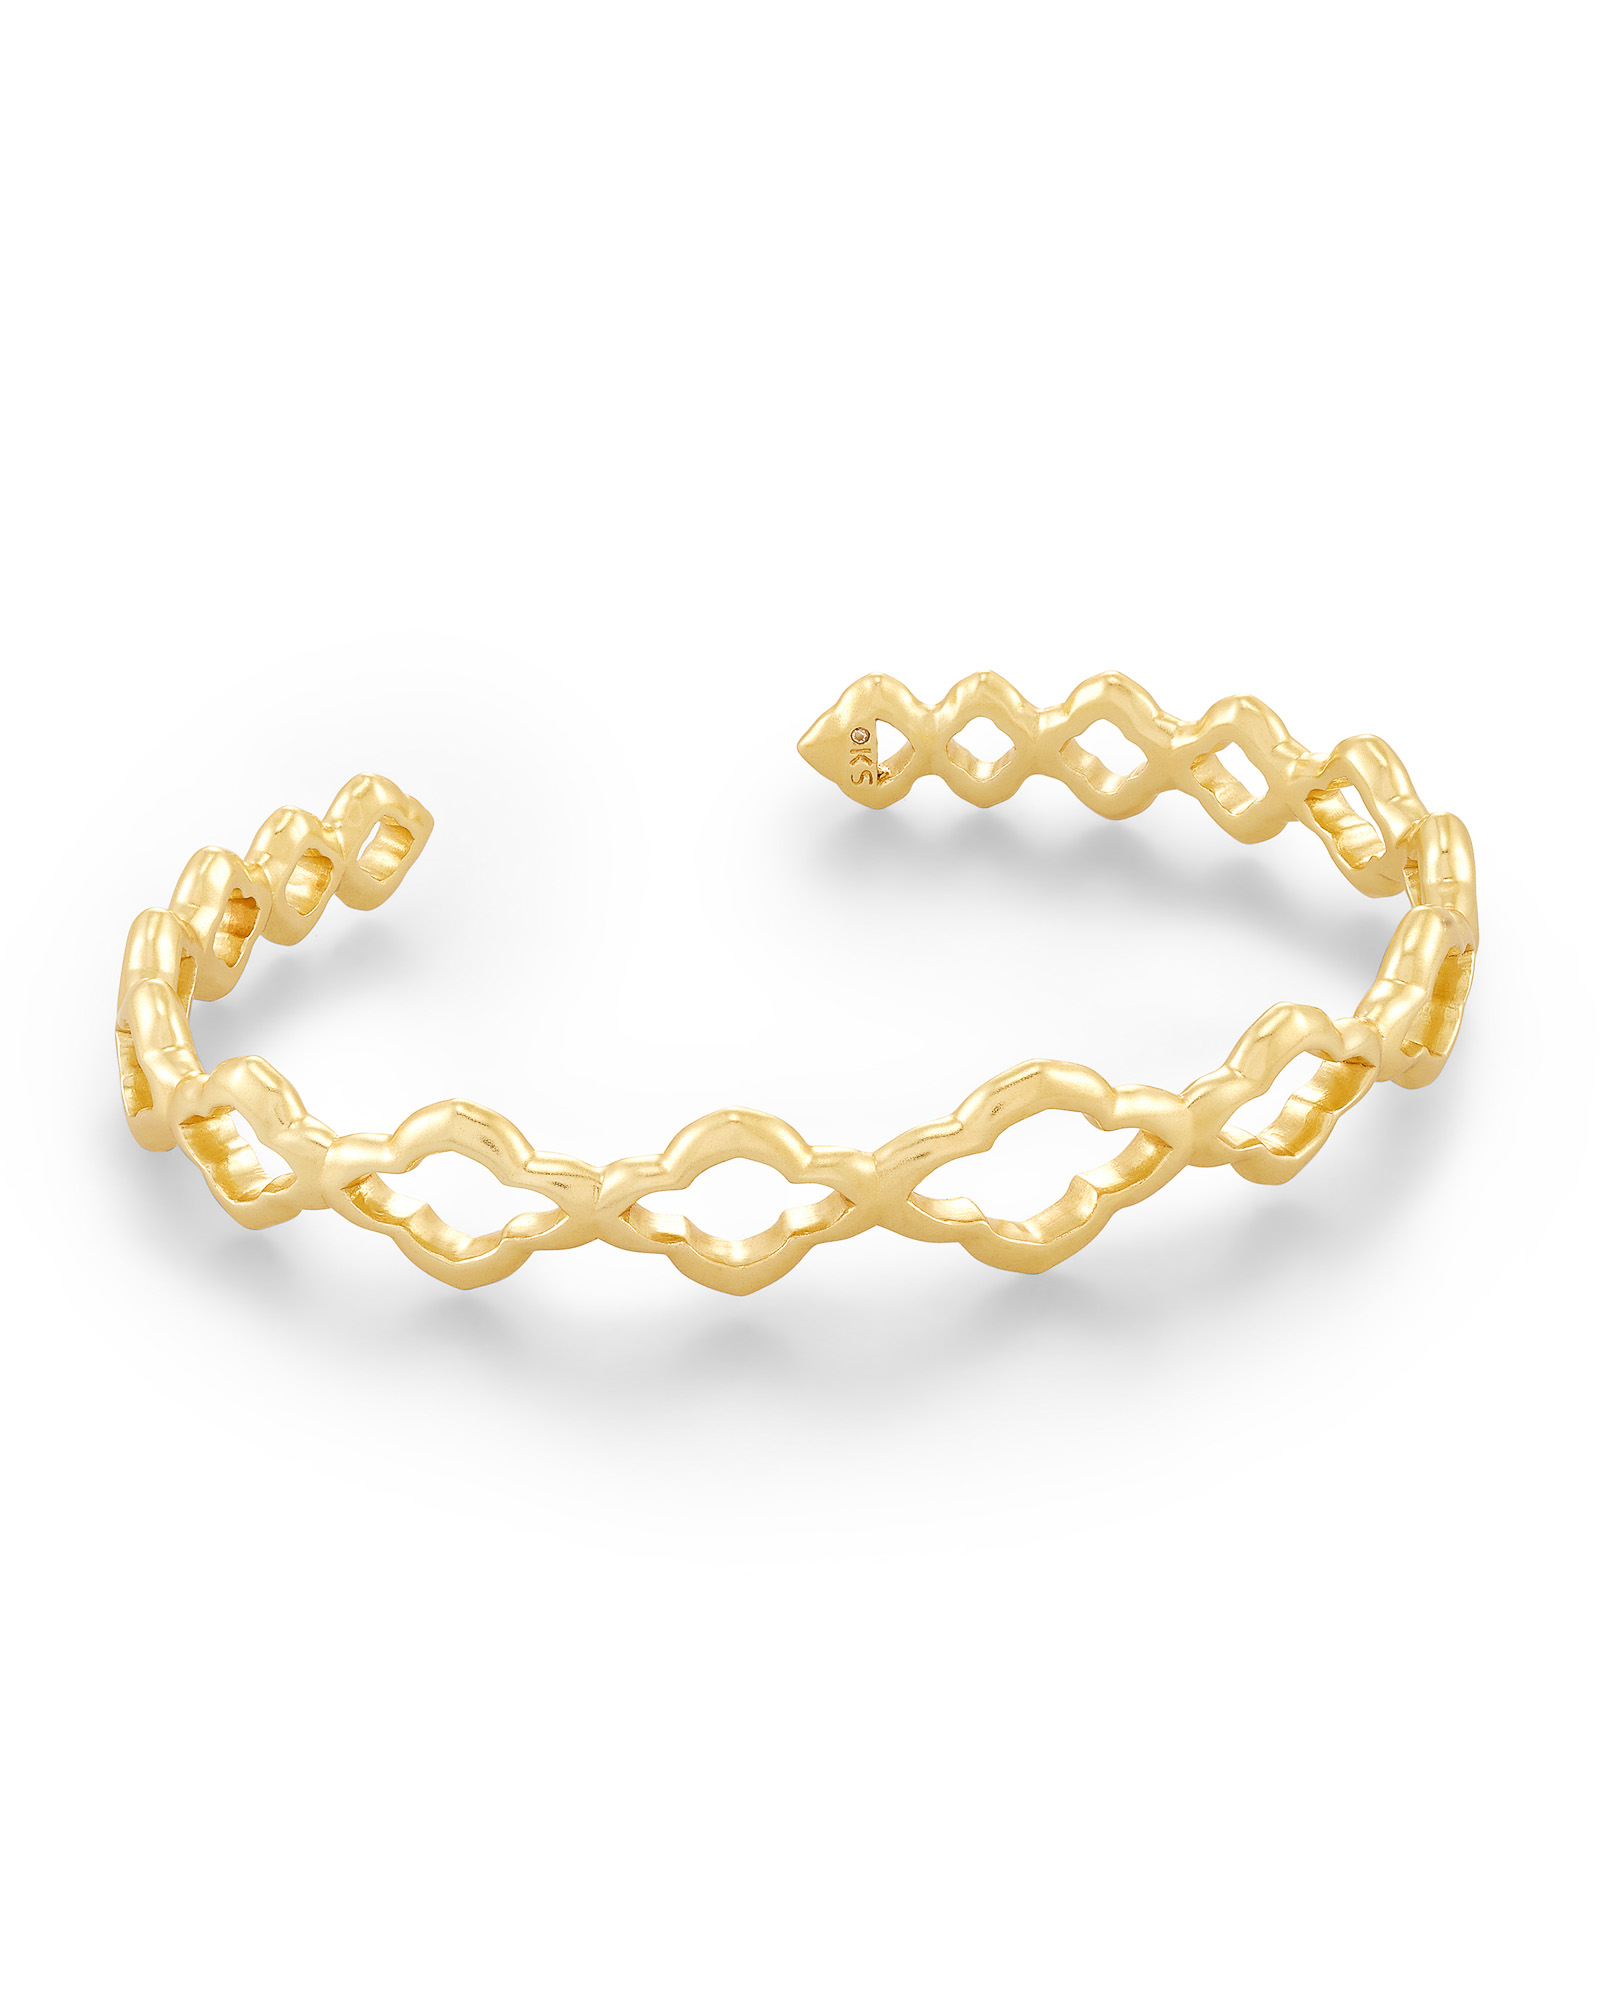 Rue Cuff Bracelet in Gold by Kendra Scott – Specialty Design Company